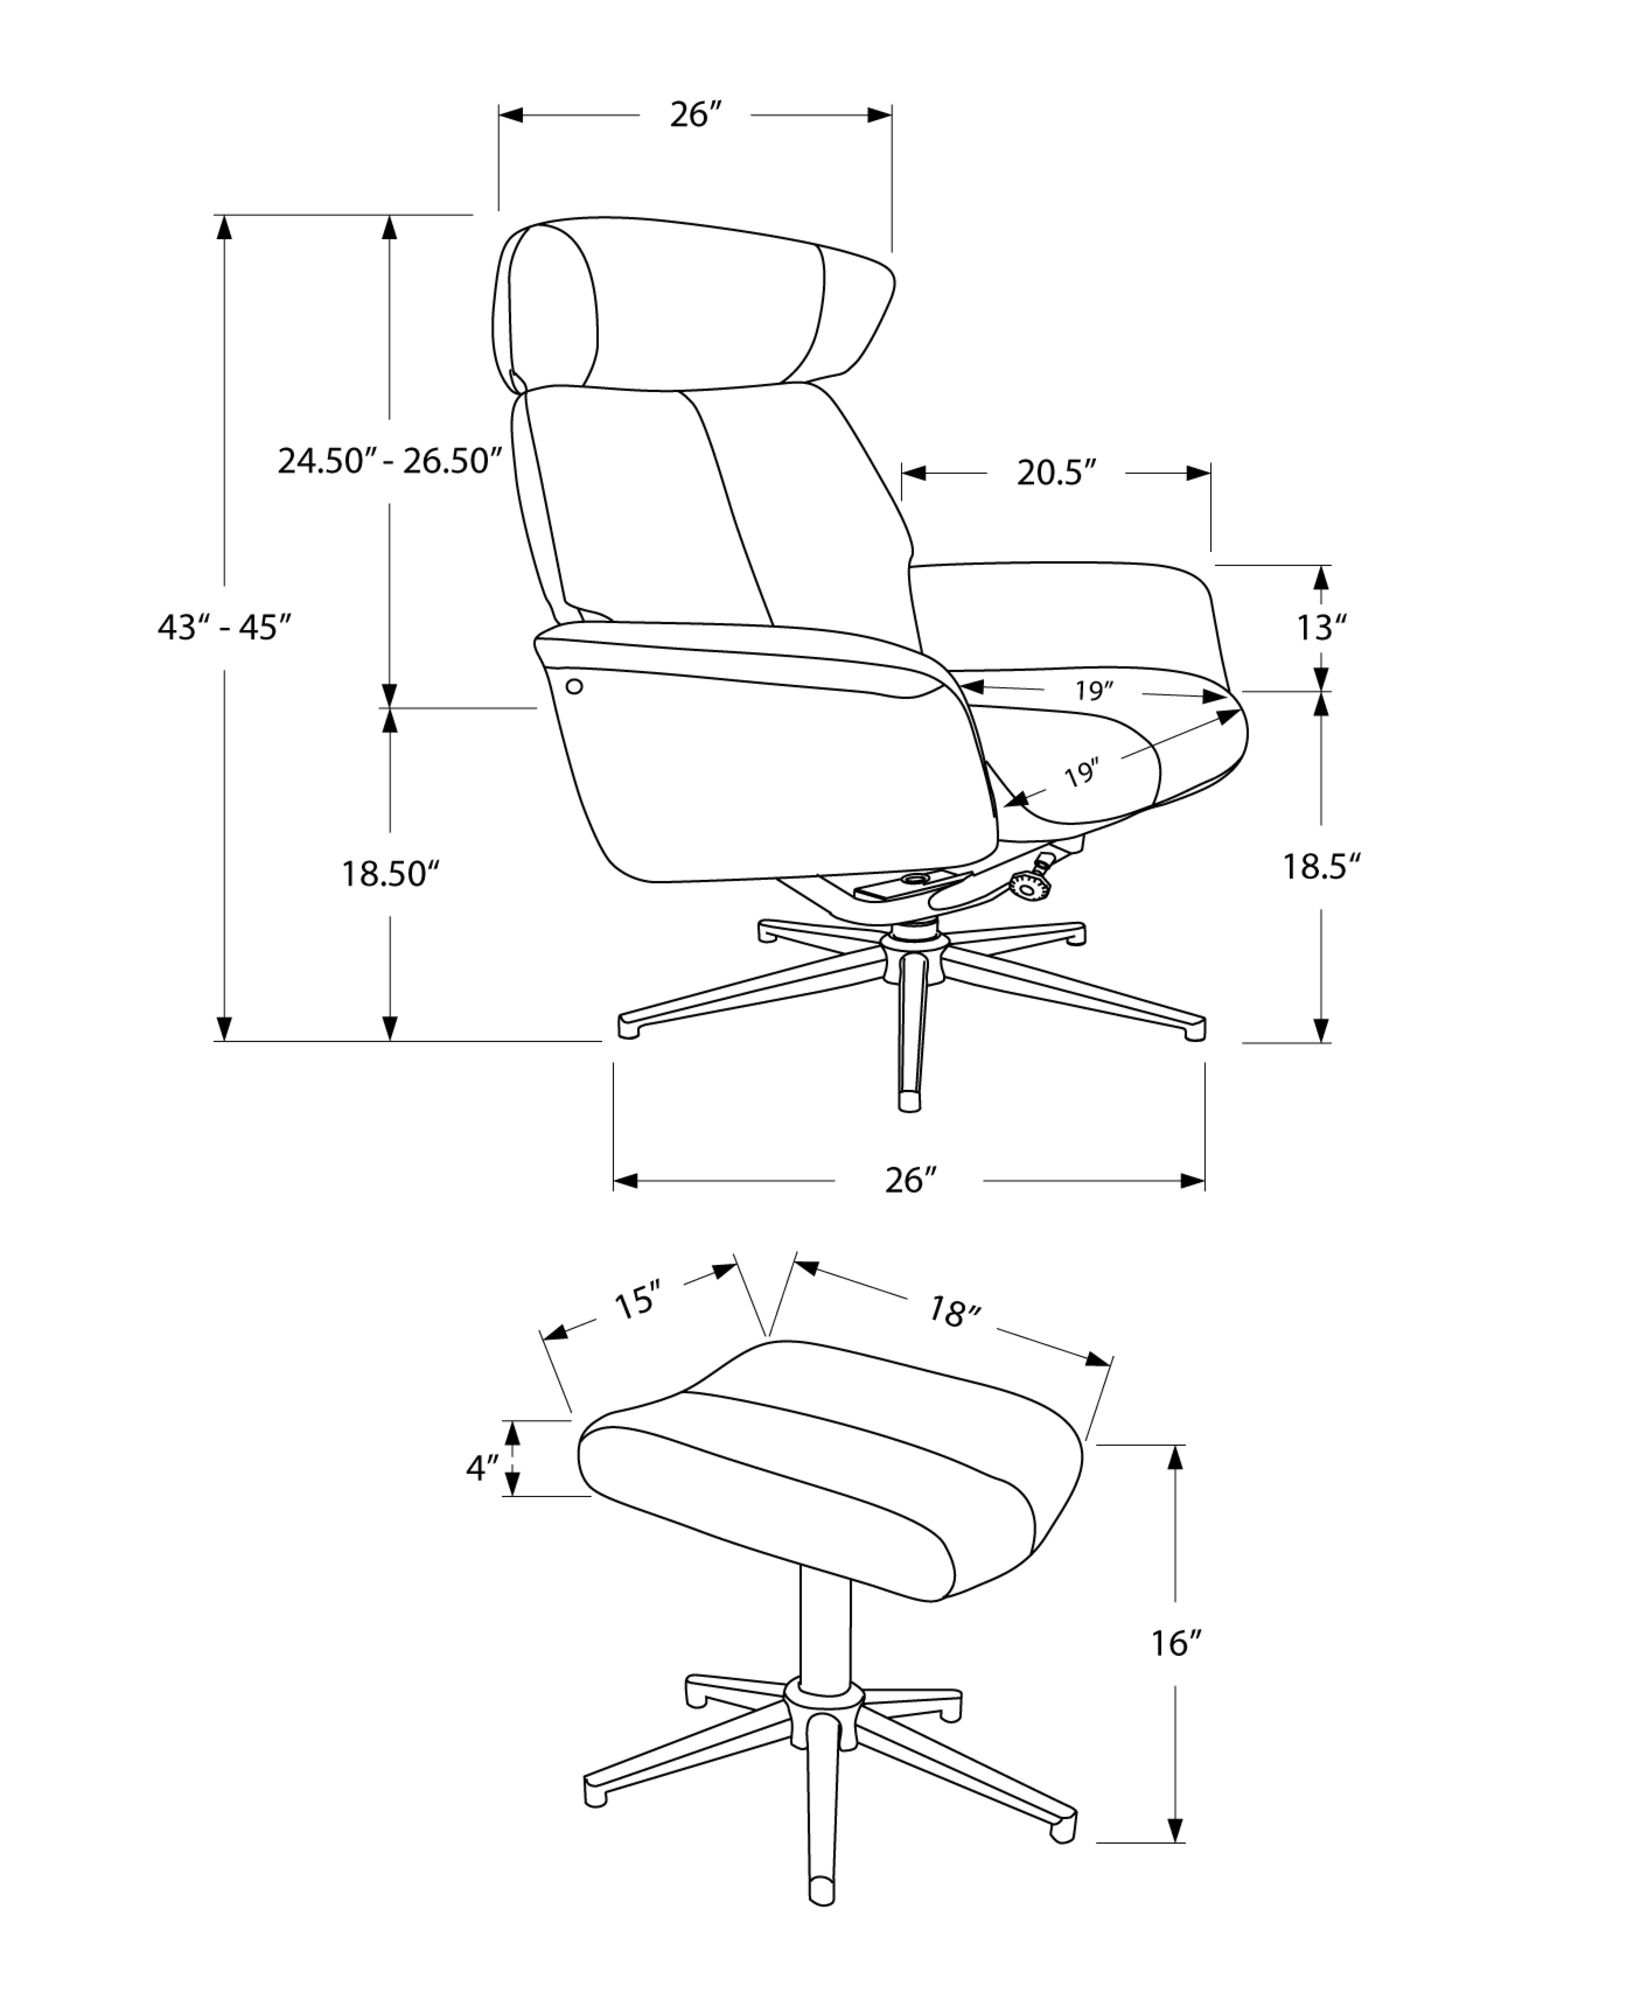 44" x 47" x 59" Black Finish Foam and Metal Swivel Reclining Chair with Adjustable Headrest